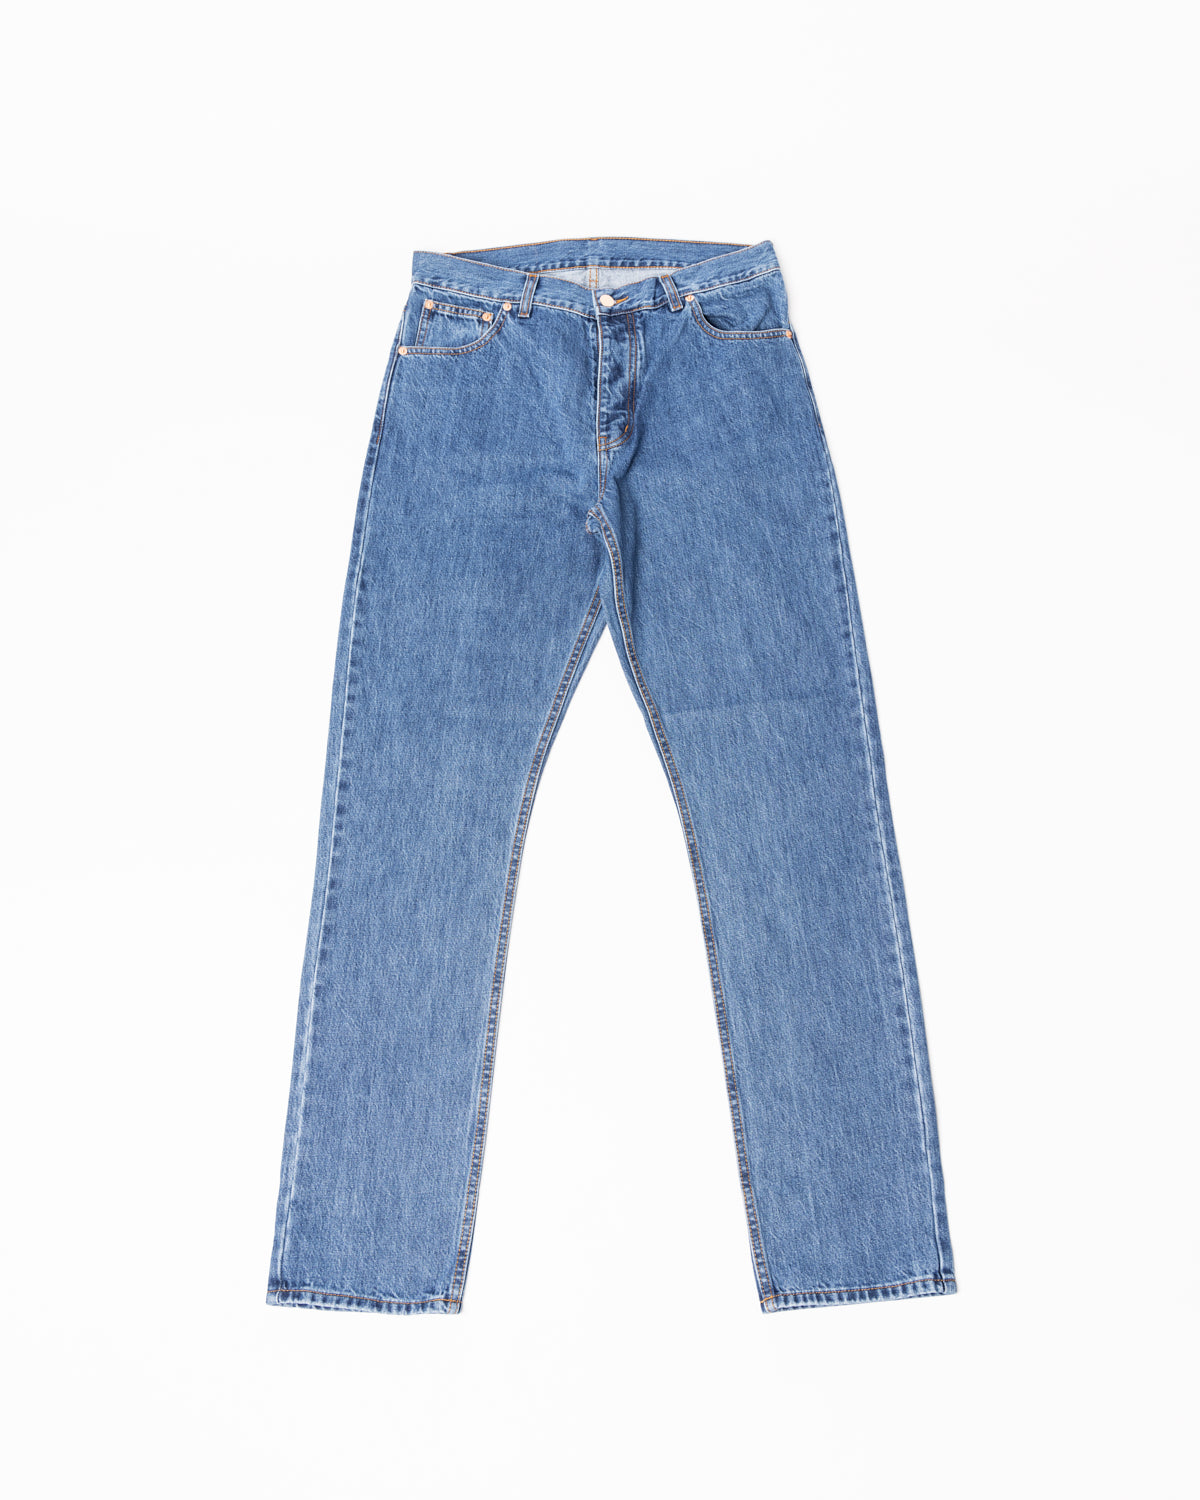 Indigo Jeans– Sullivan's